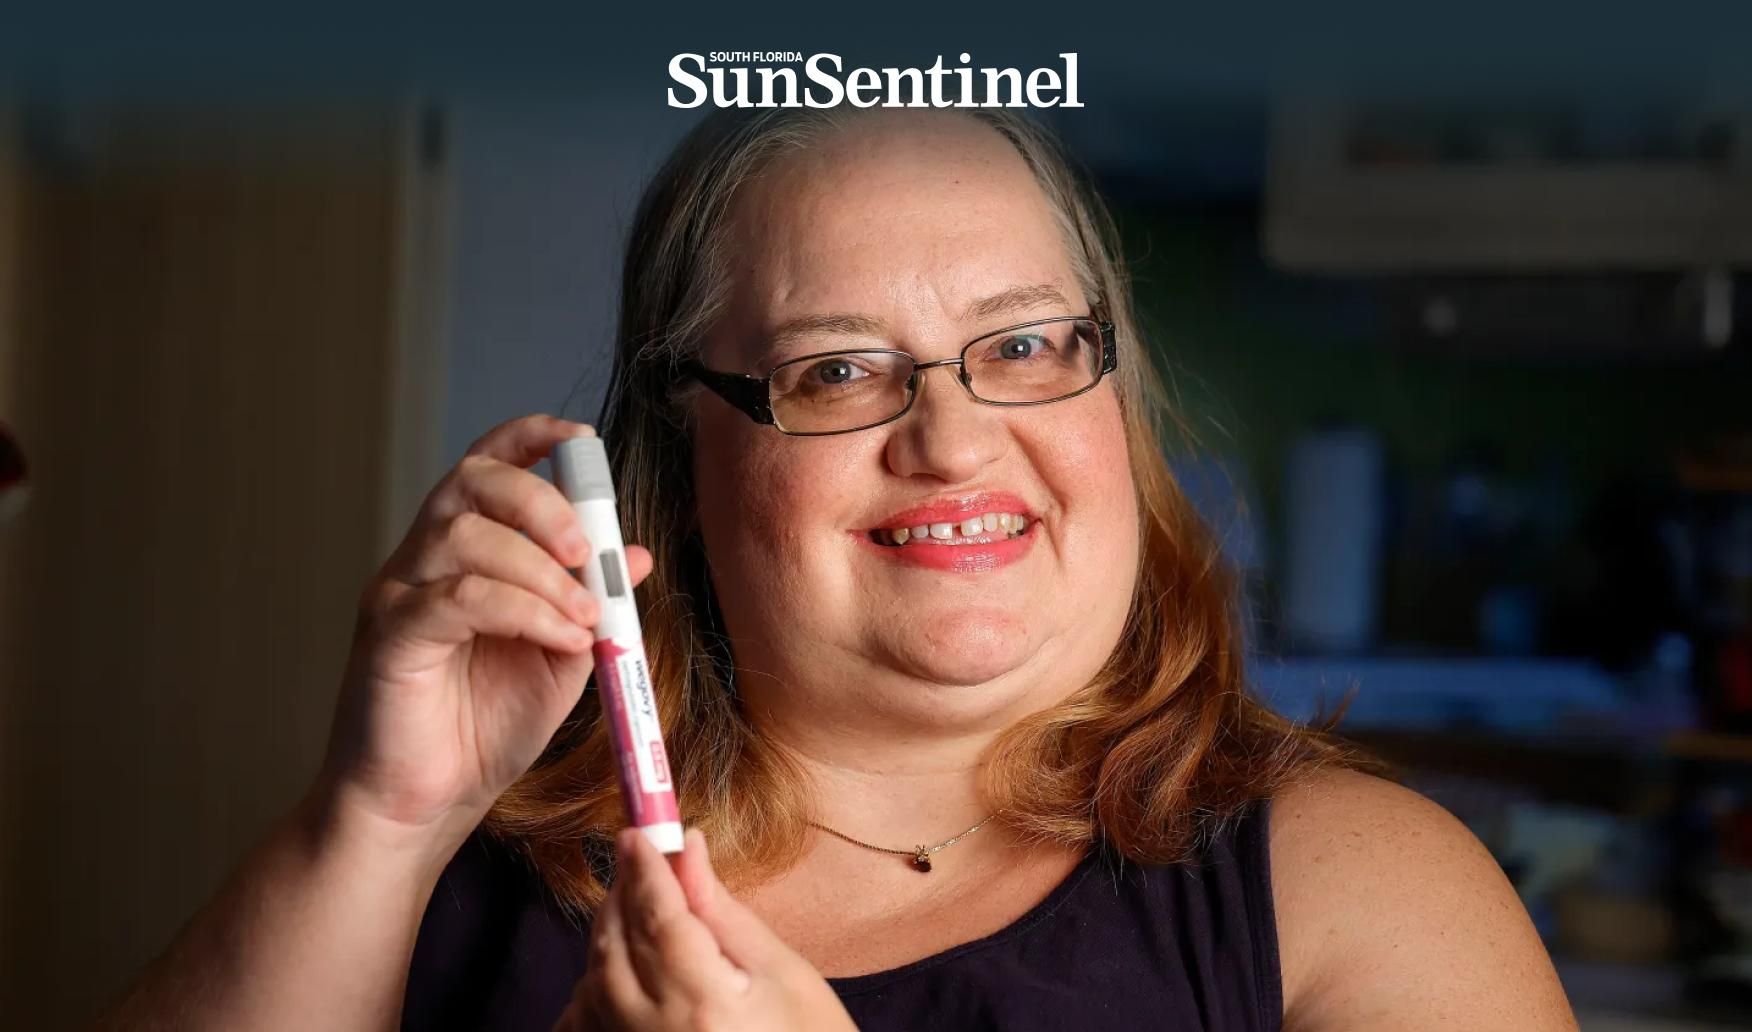 Jennifer Kirtley de Lake Worth Beach con su medicamento para perder peso, Wegovy. (Carline Jean/South Florida Sun Sentinel)